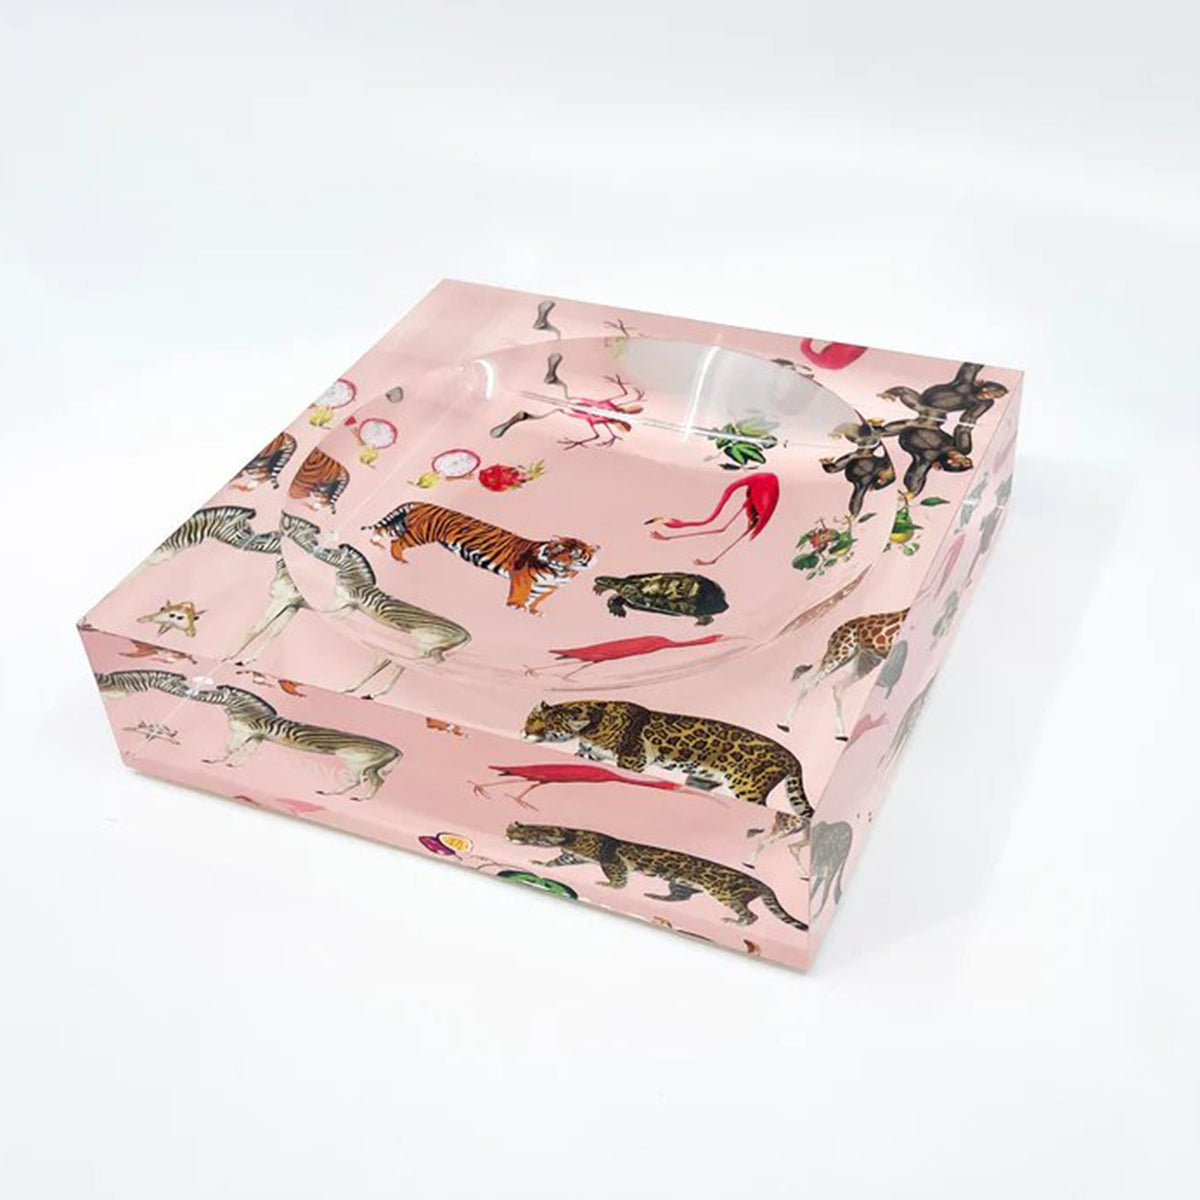 Nicolette Mayer Exotix Flamingo Acrylic Candy Tray 6x6